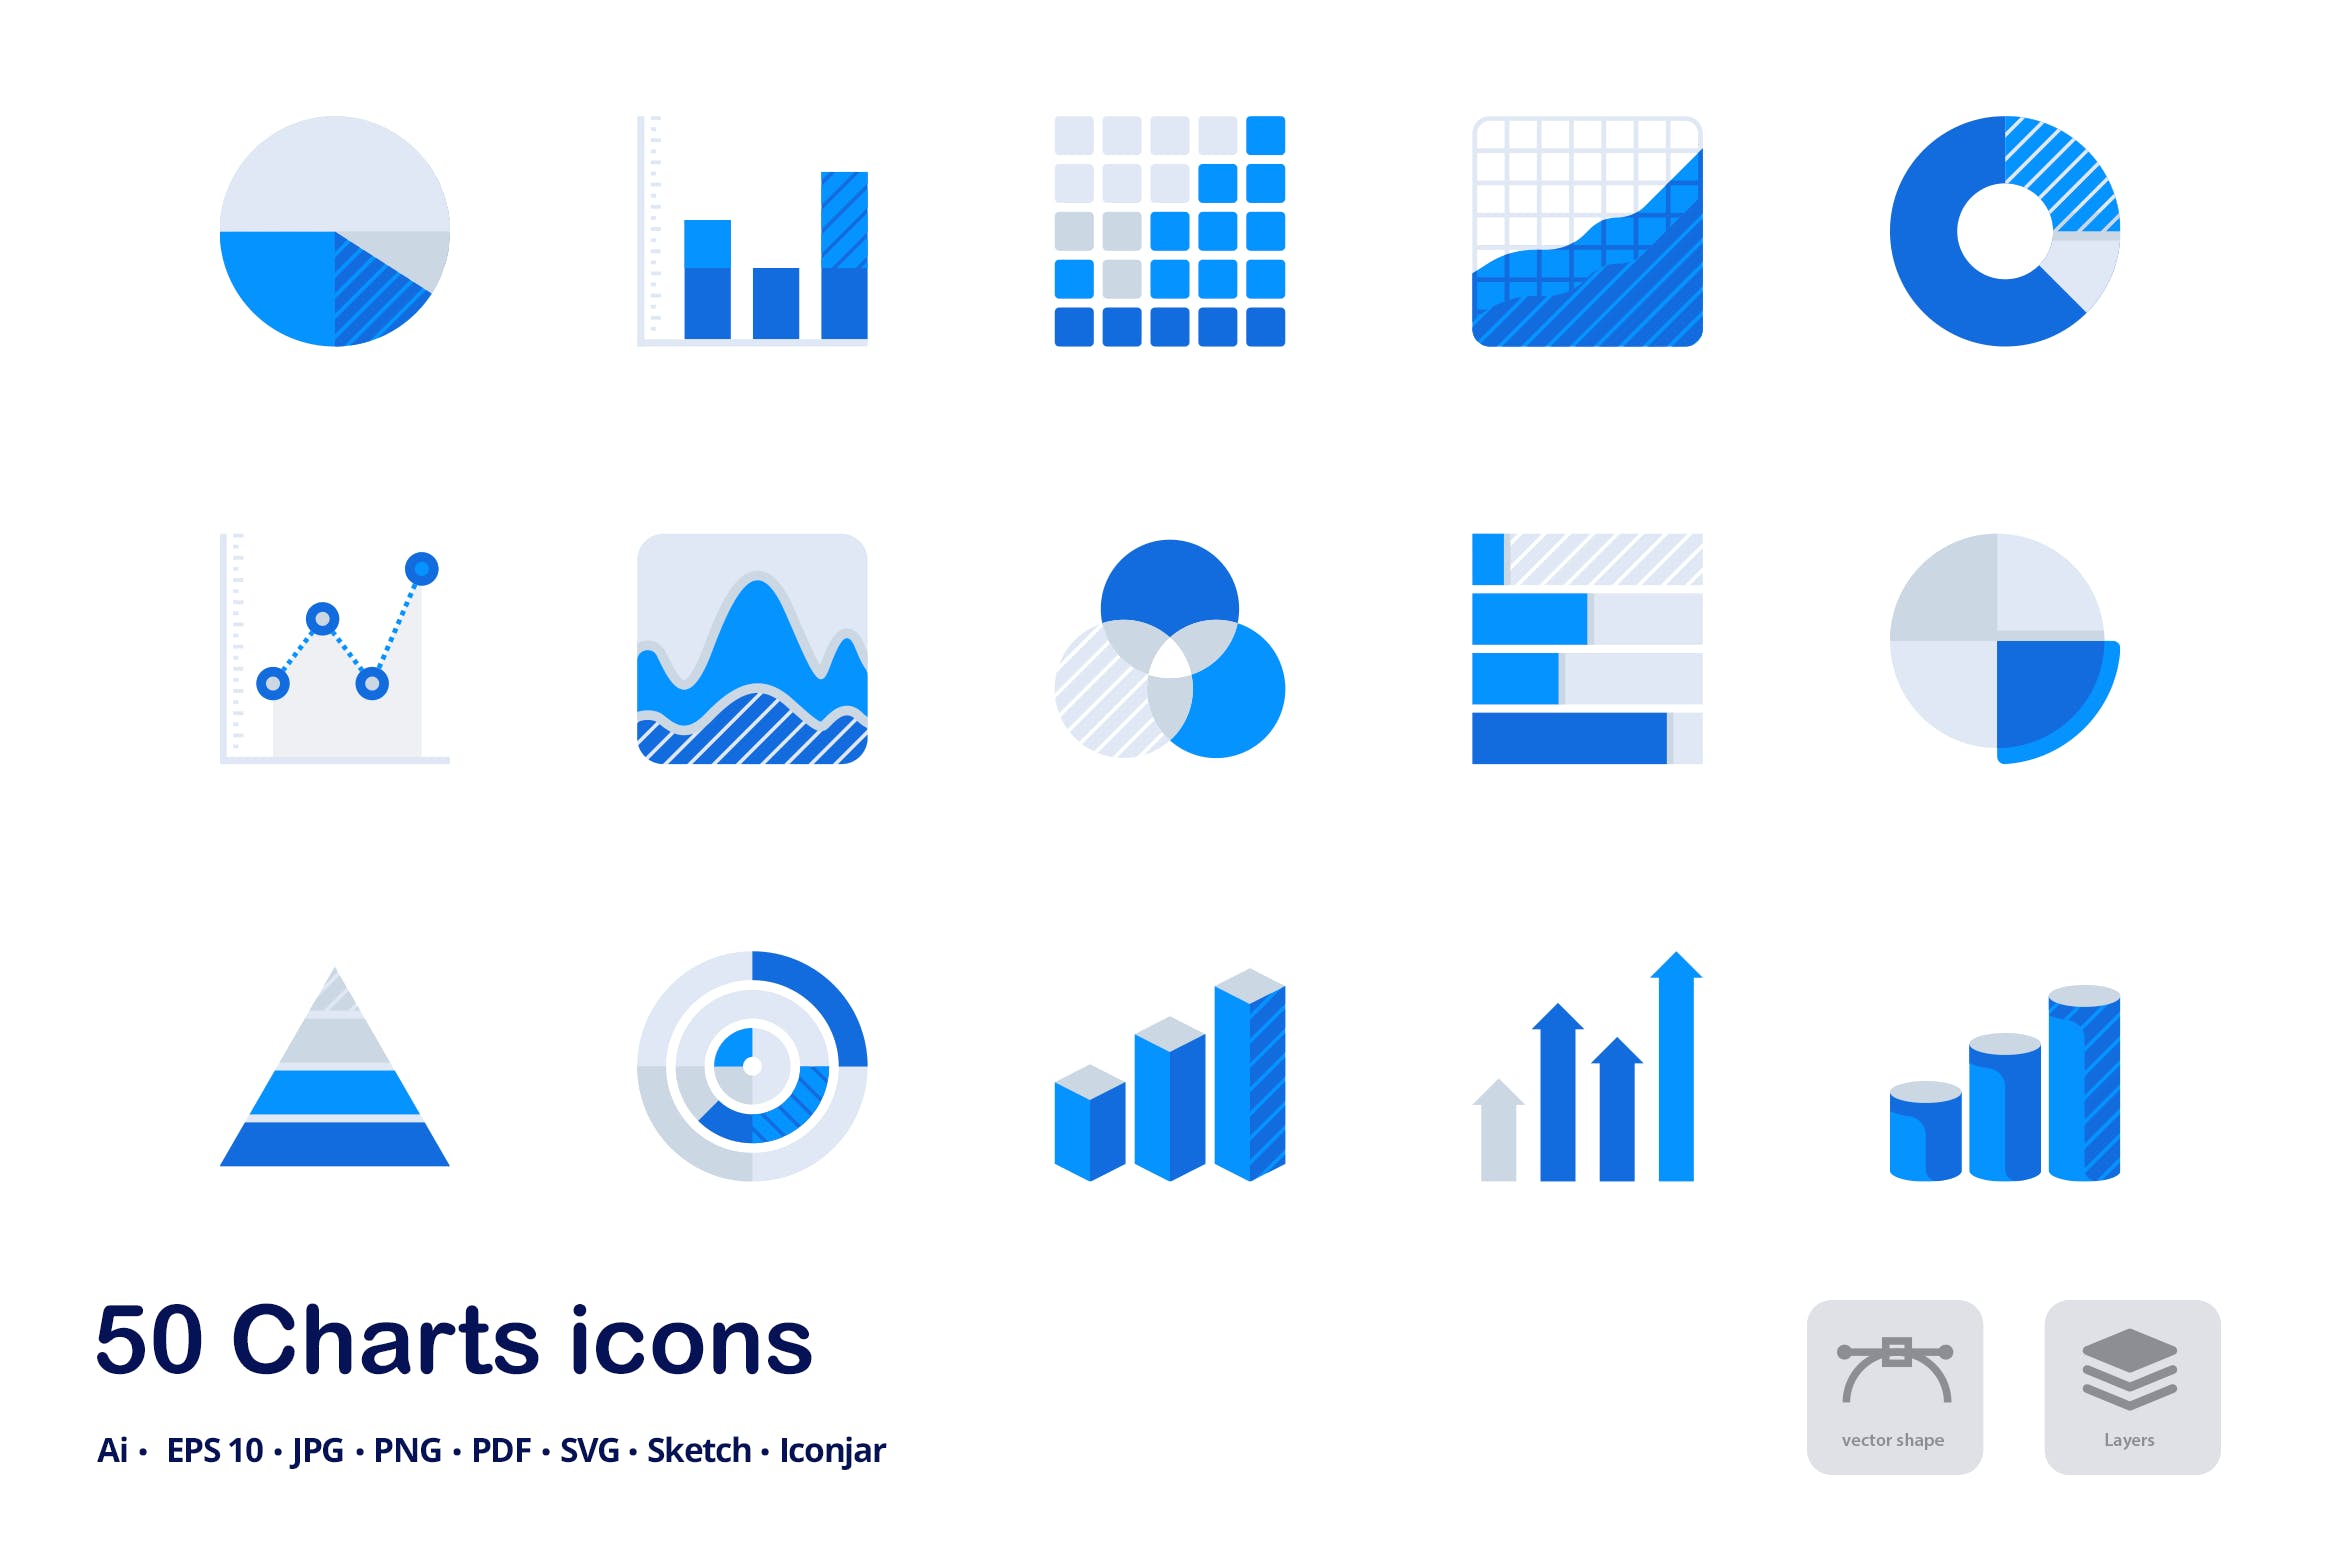 统计图表主题双色调扁平化矢量图标 Charts and Statistics Accent Duo Tone Flat Icons插图